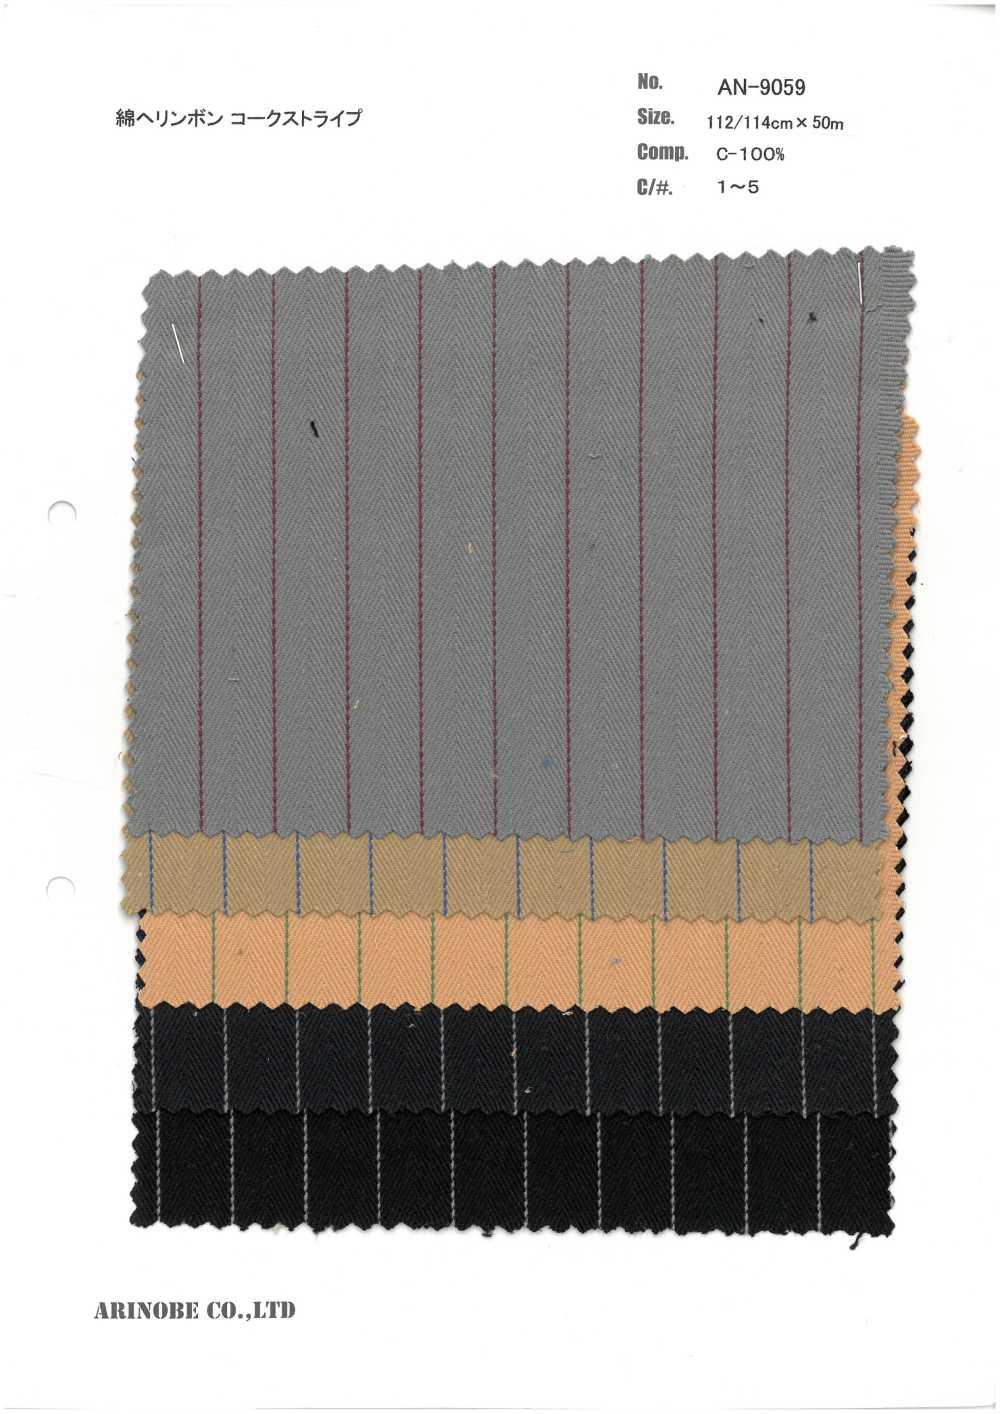 AN-9059 Cotton Herringbone Cork Stripe[Textile / Fabric] ARINOBE CO., LTD.